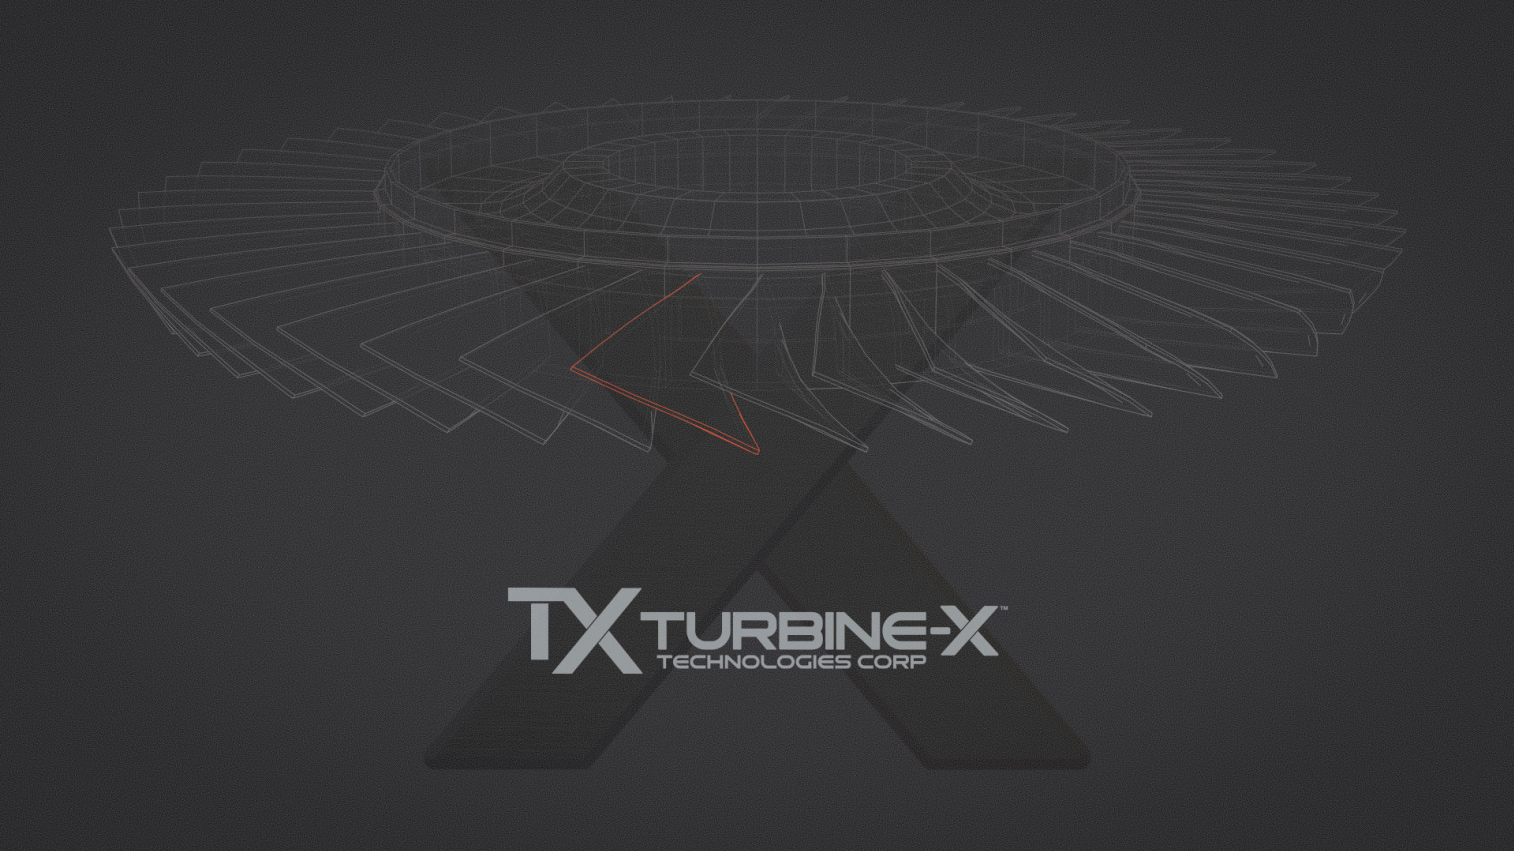 TURBINE-X Technologies Corp